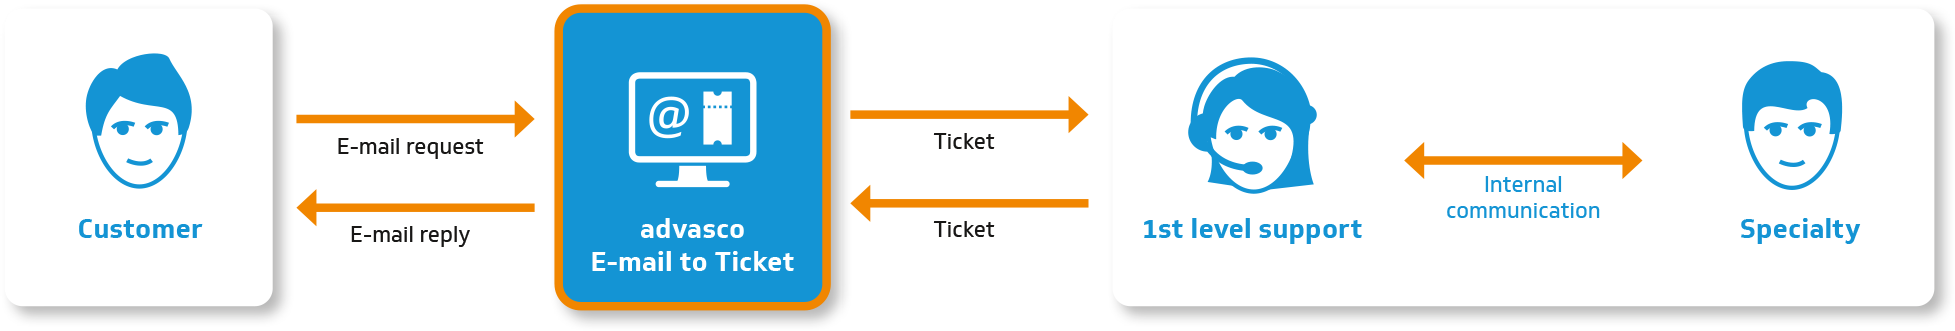 E-Mail to Ticket | advasco IT solution